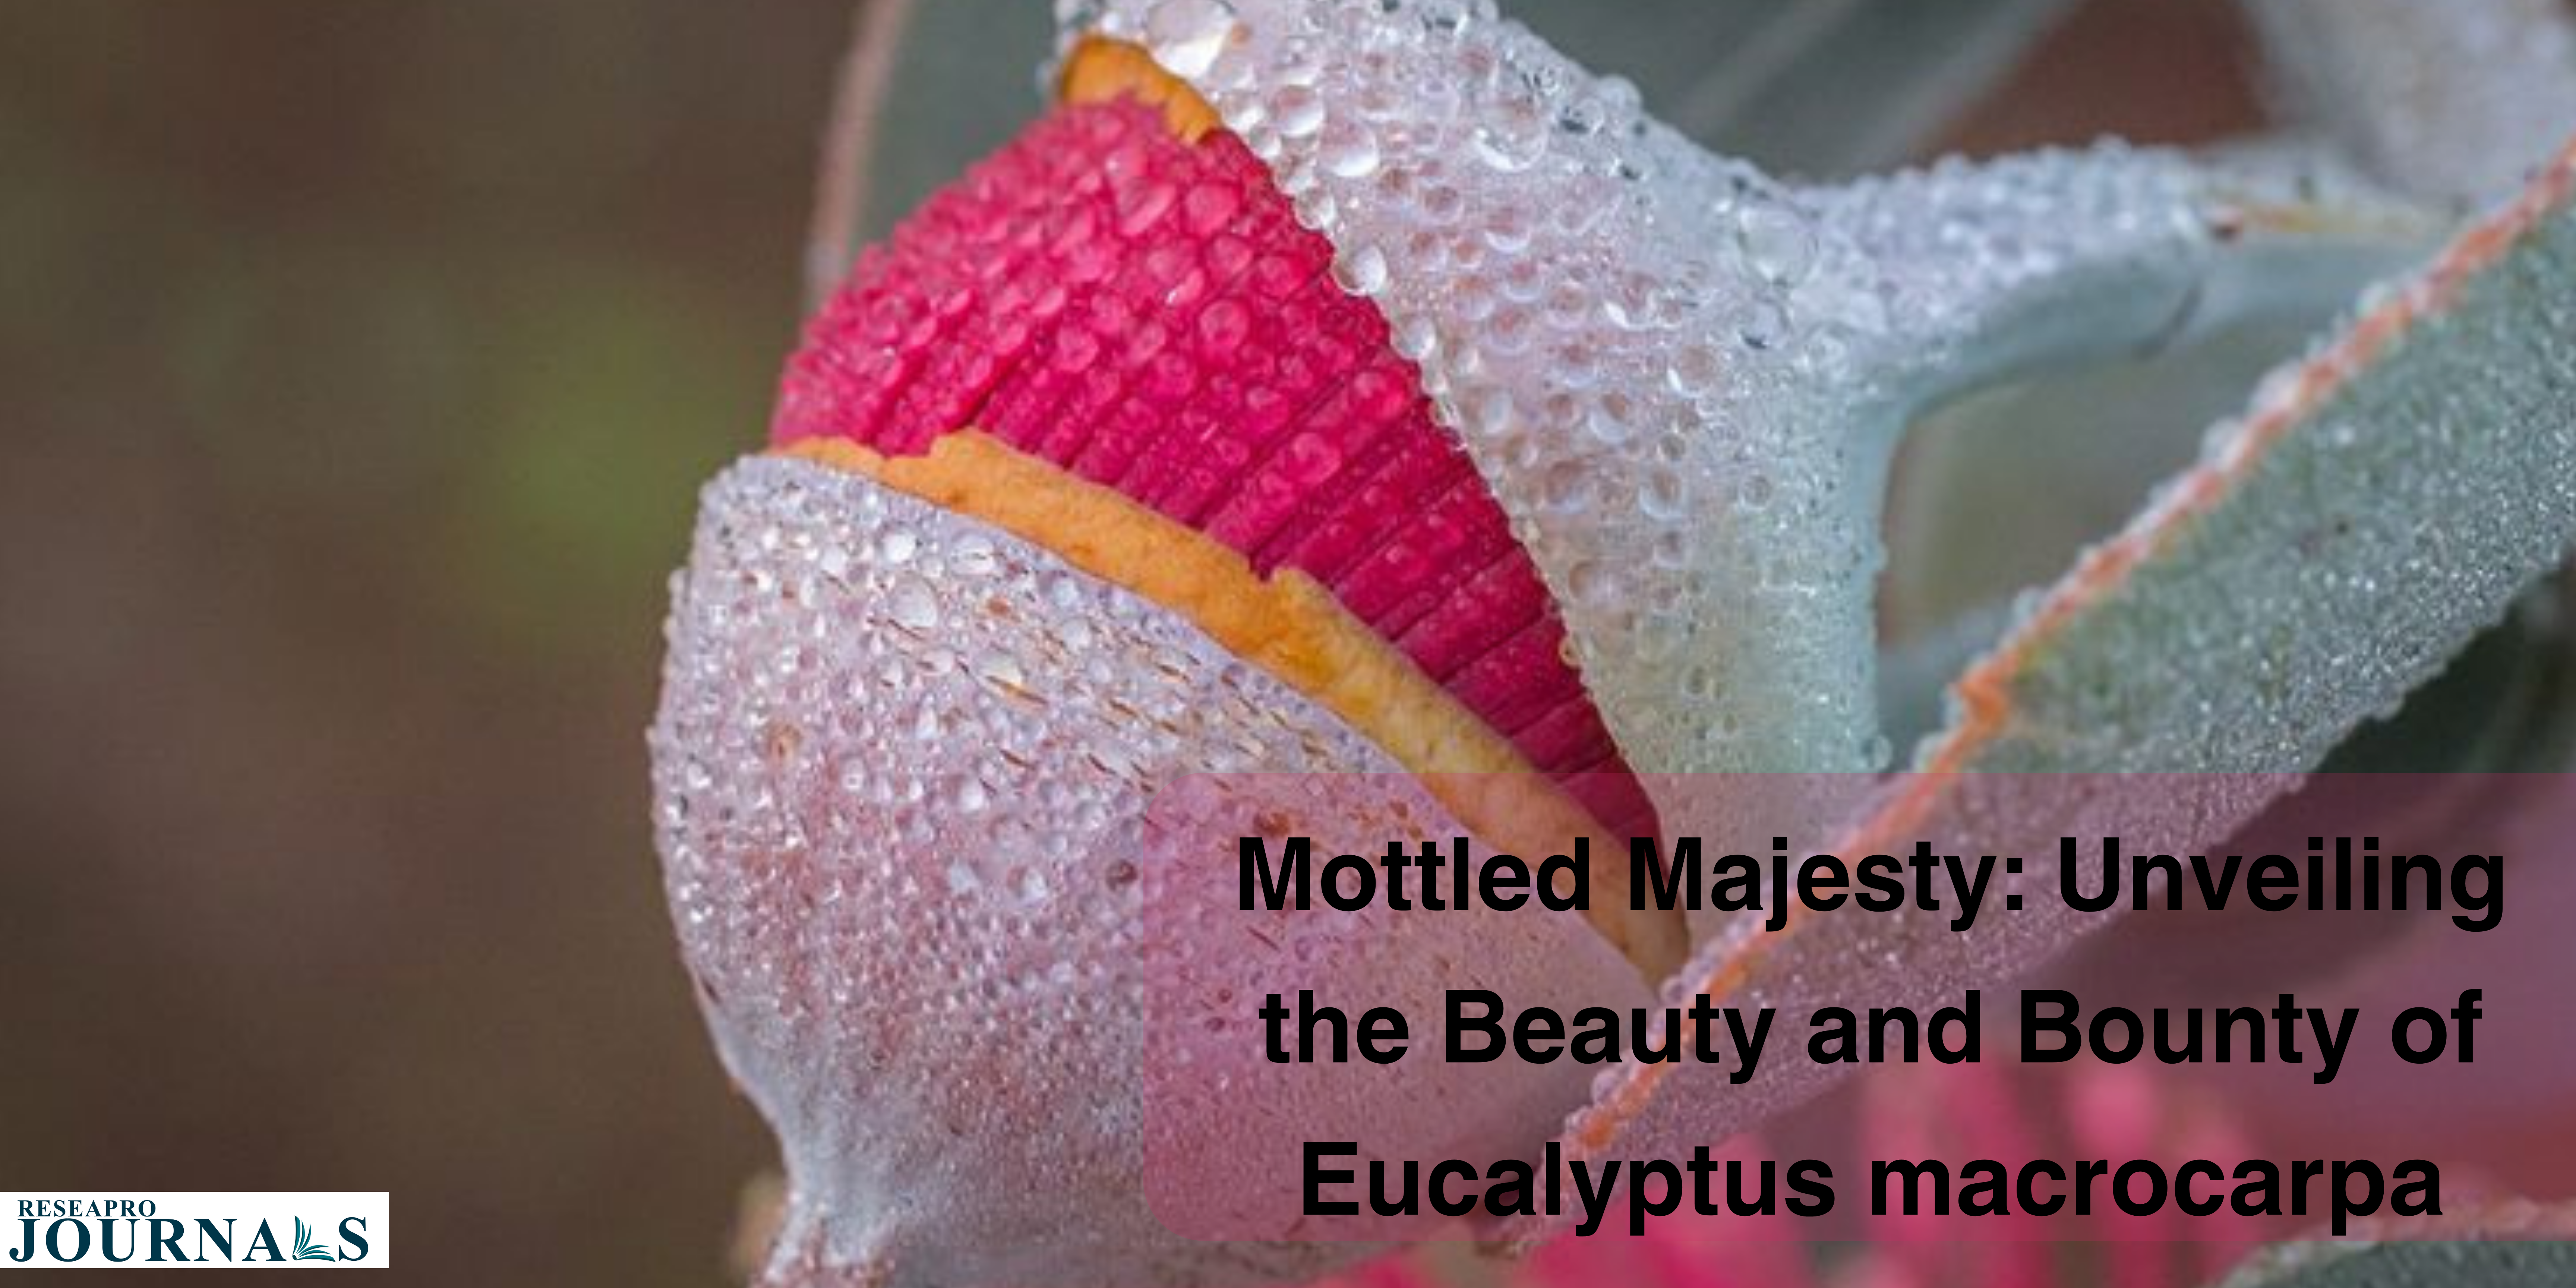 Mottled Majesty: Unveiling the Beauty and Bounty of Eucalyptus macrocarpa